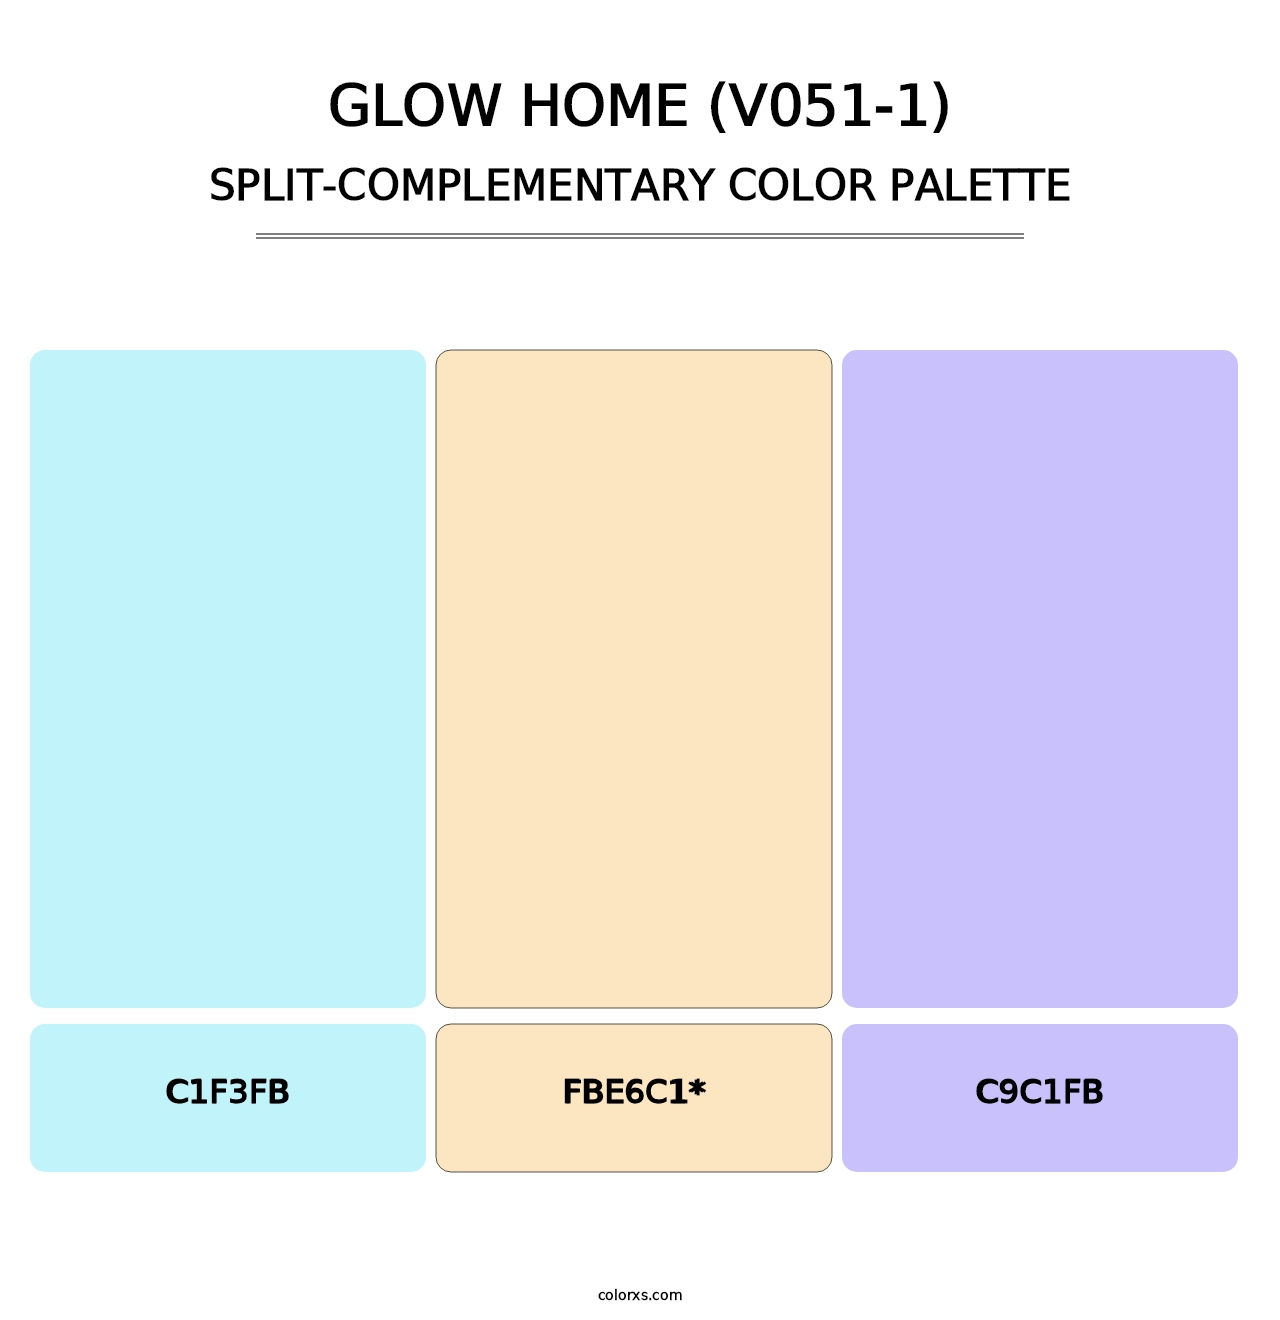 Glow Home (V051-1) - Split-Complementary Color Palette